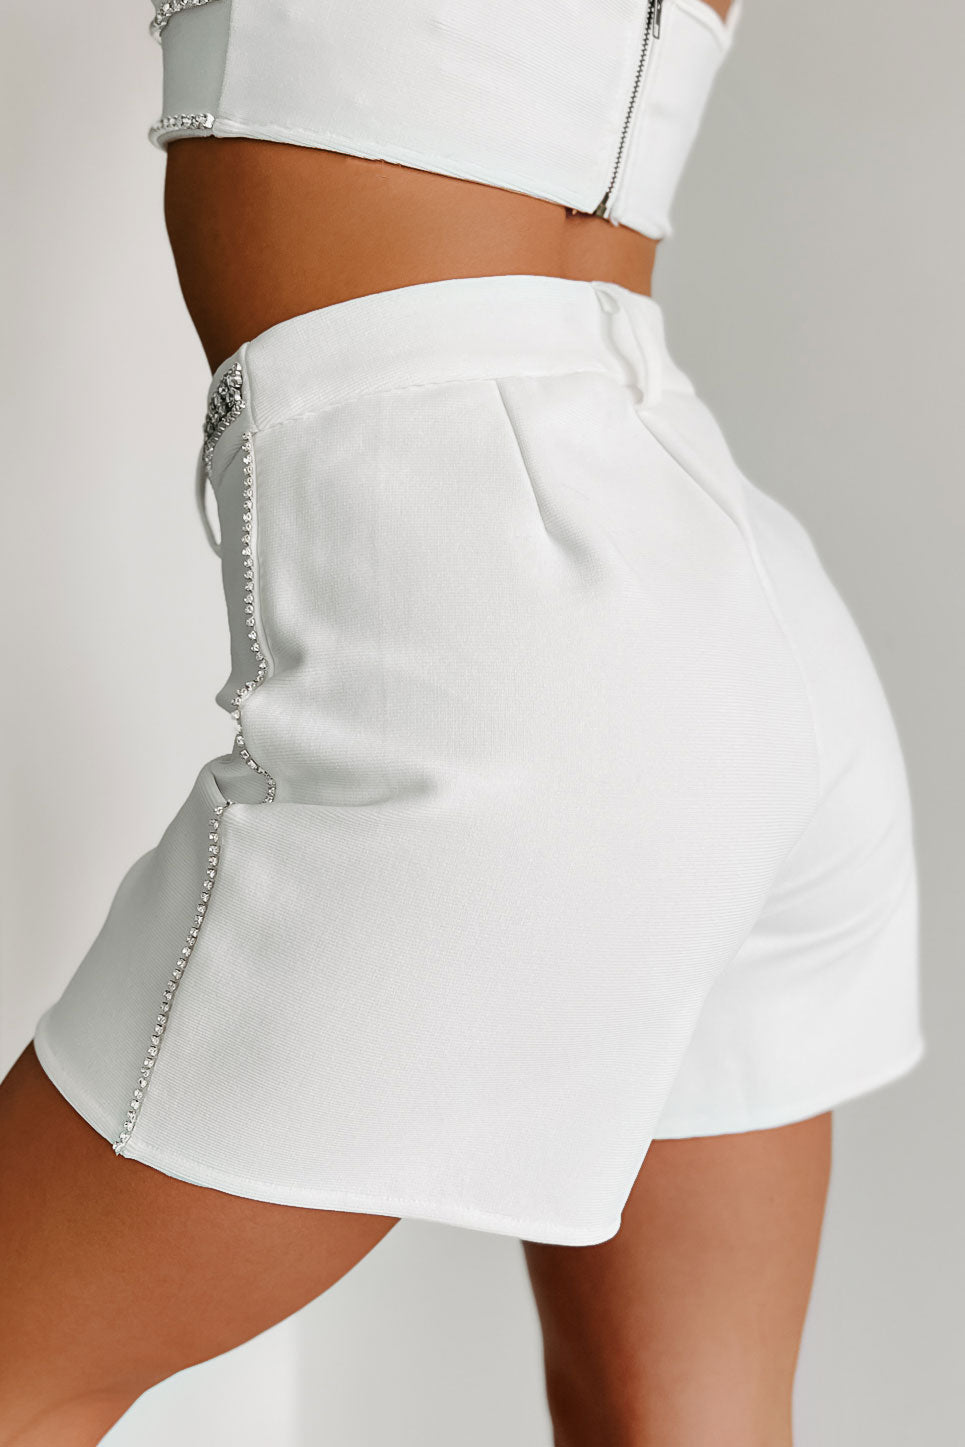 Elegant As Always High Waist Rhinestone Trim Shorts (White) - NanaMacs